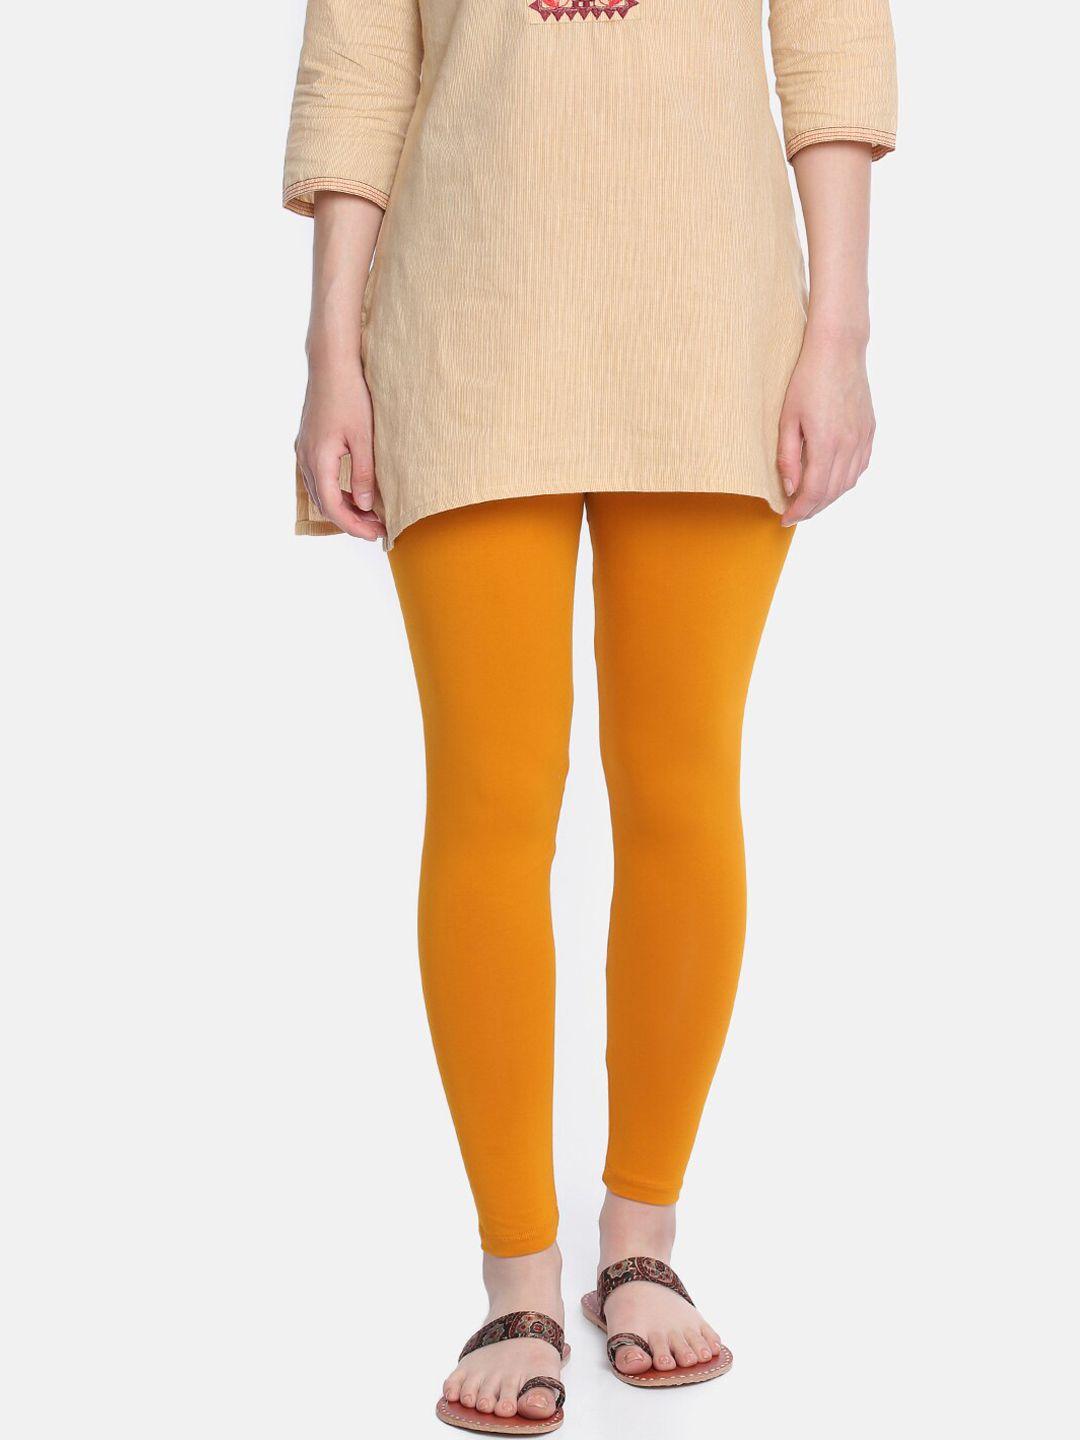 dollar-missy-women-gold-coloured-solid-ankle-length-leggings